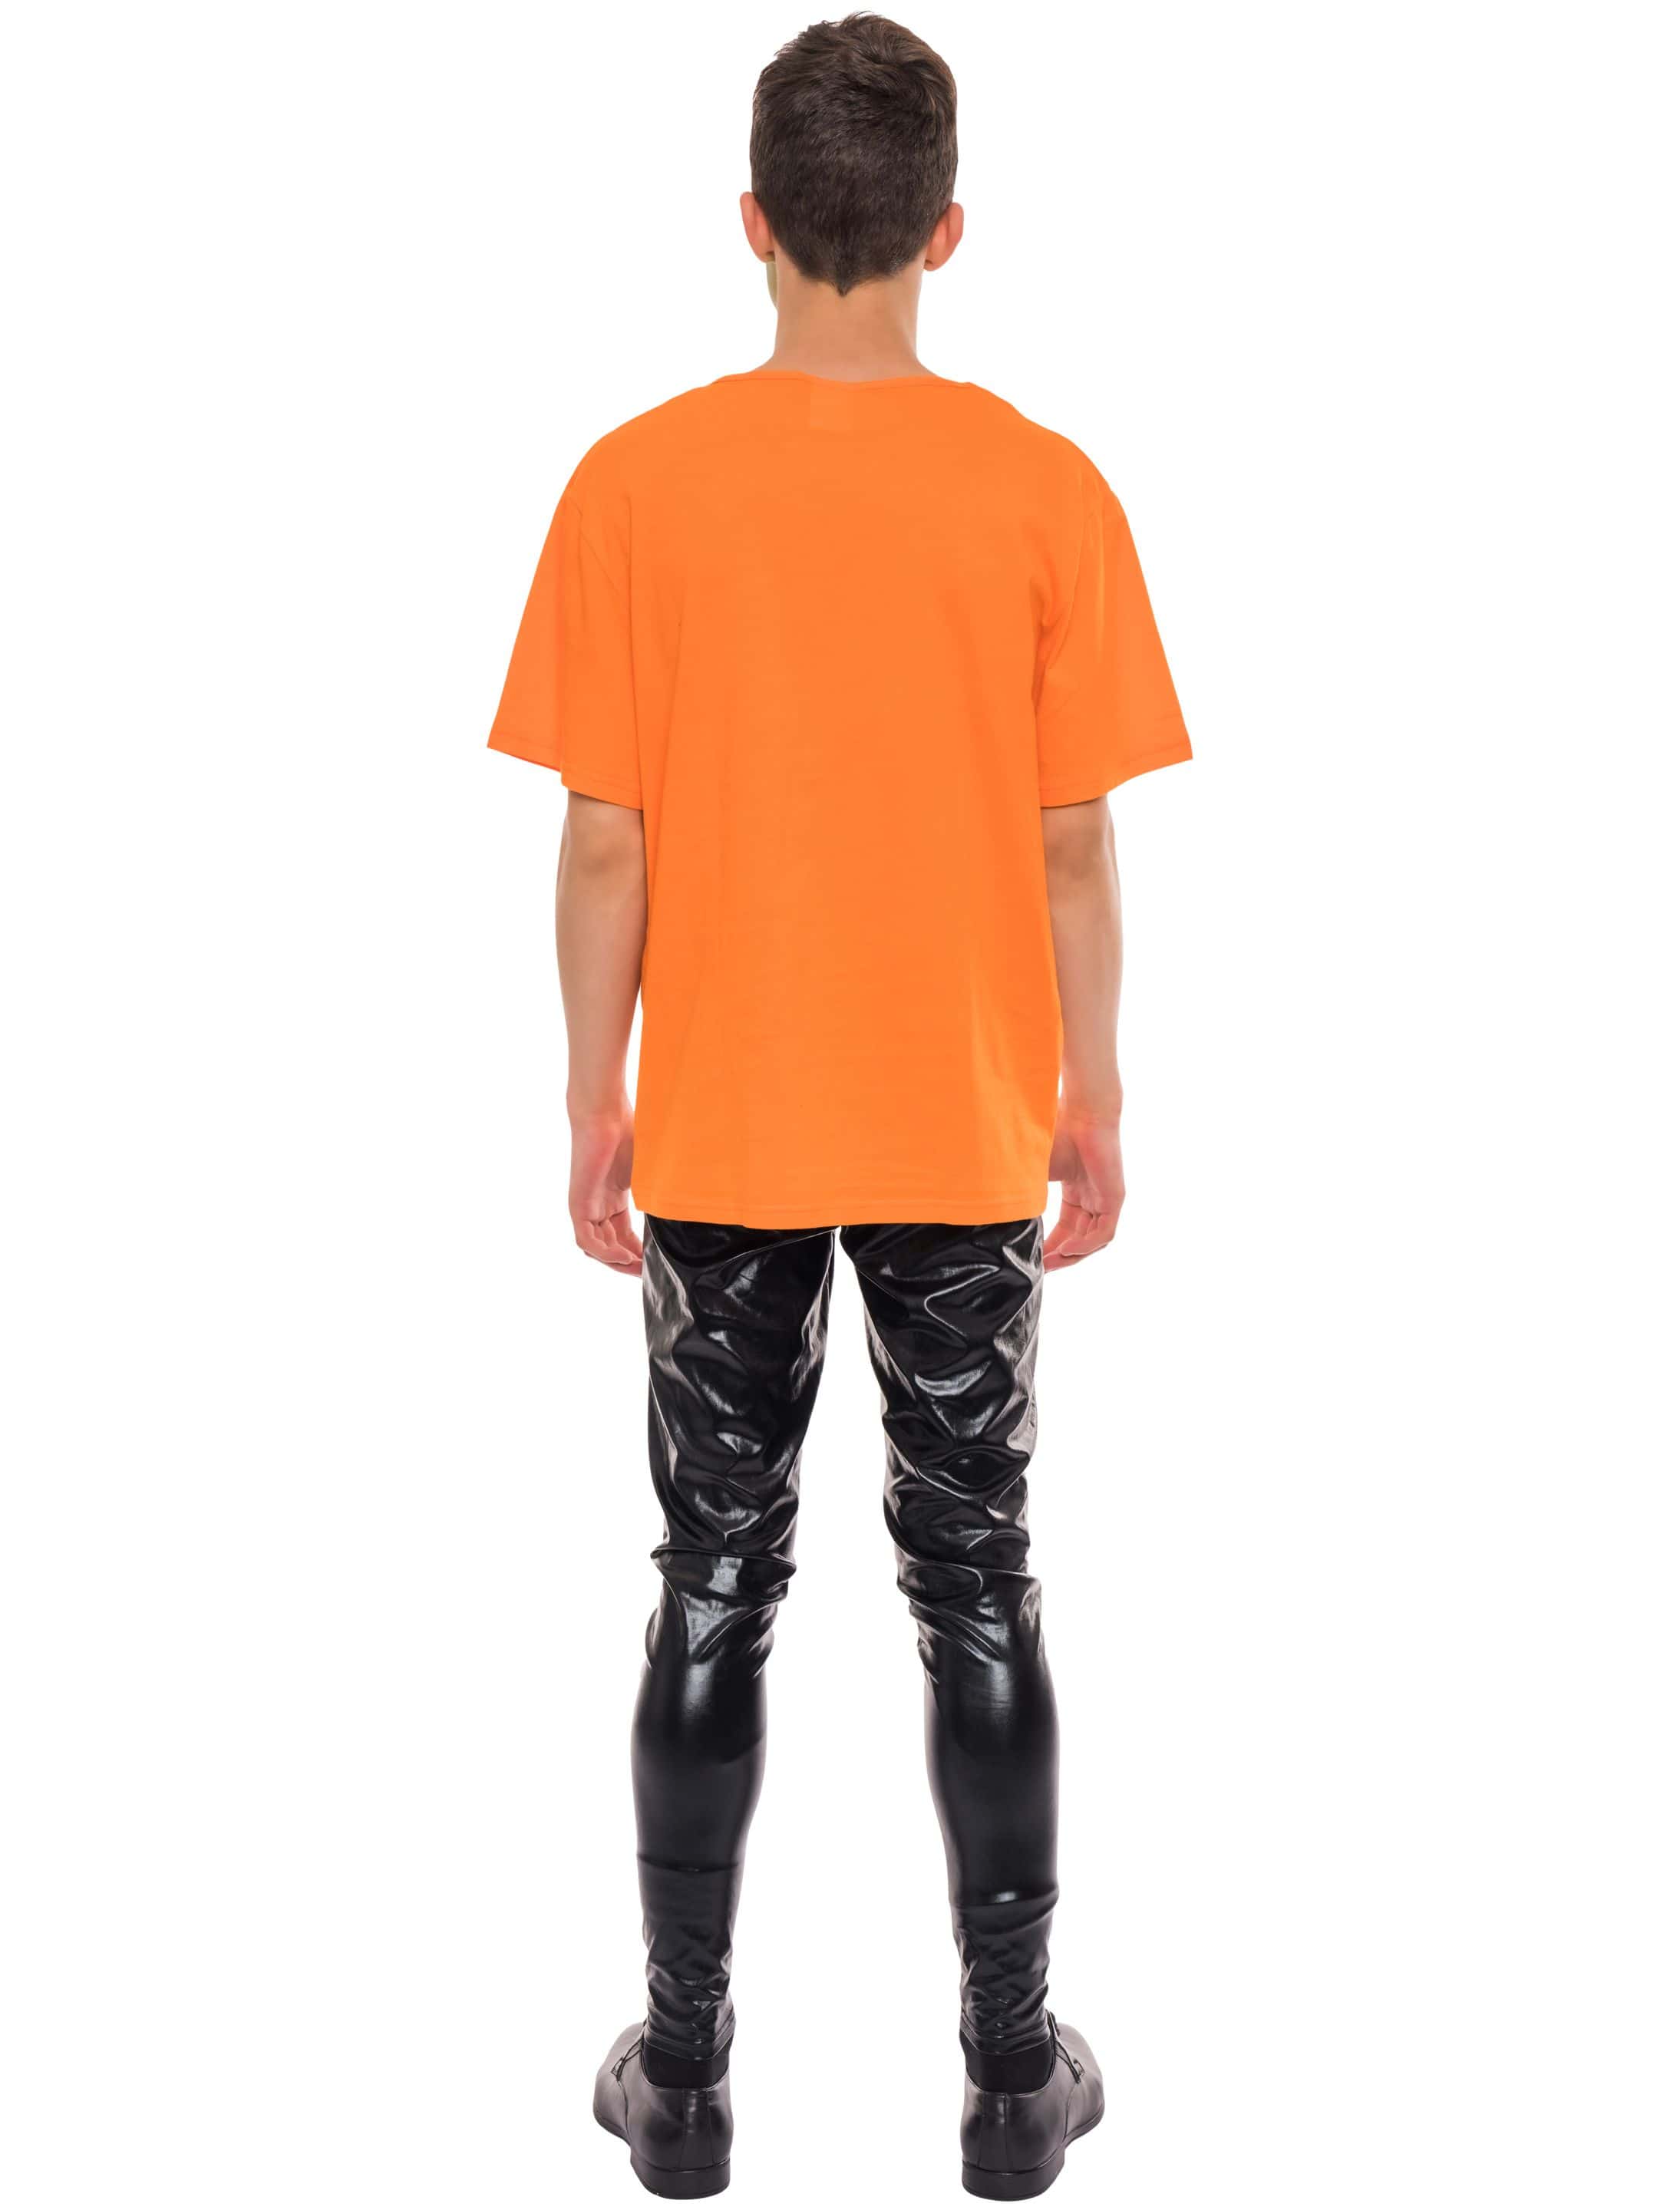 T-Shirt Halloween Kürbis orange S/M